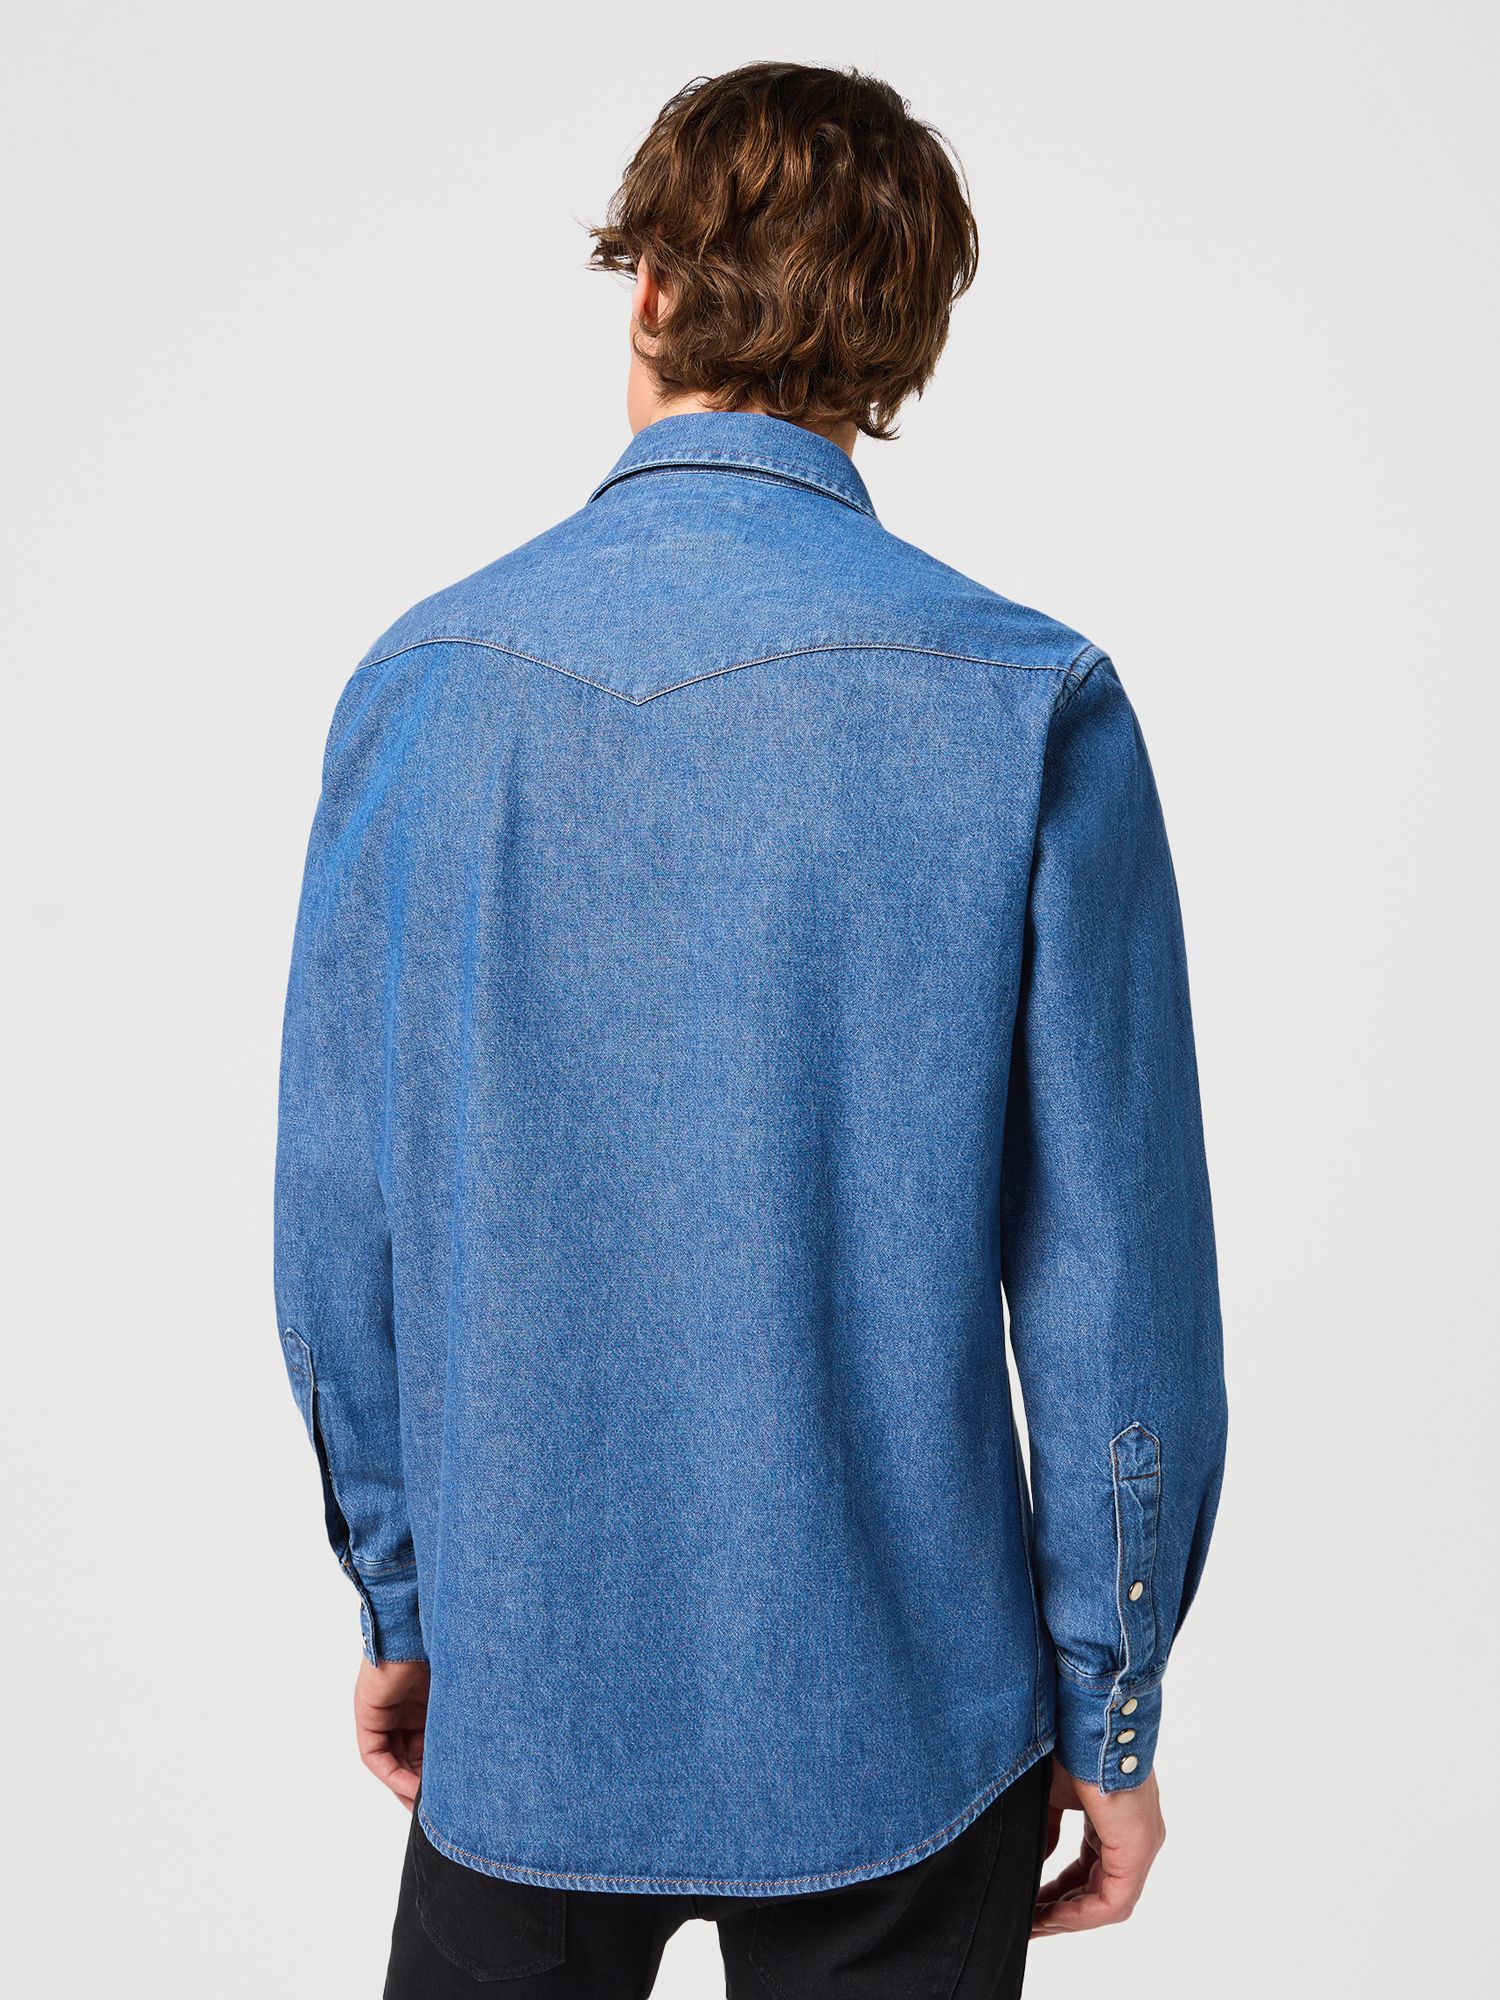 Wrangler Denim Long Sleeve Western Shirt, Blue, XL